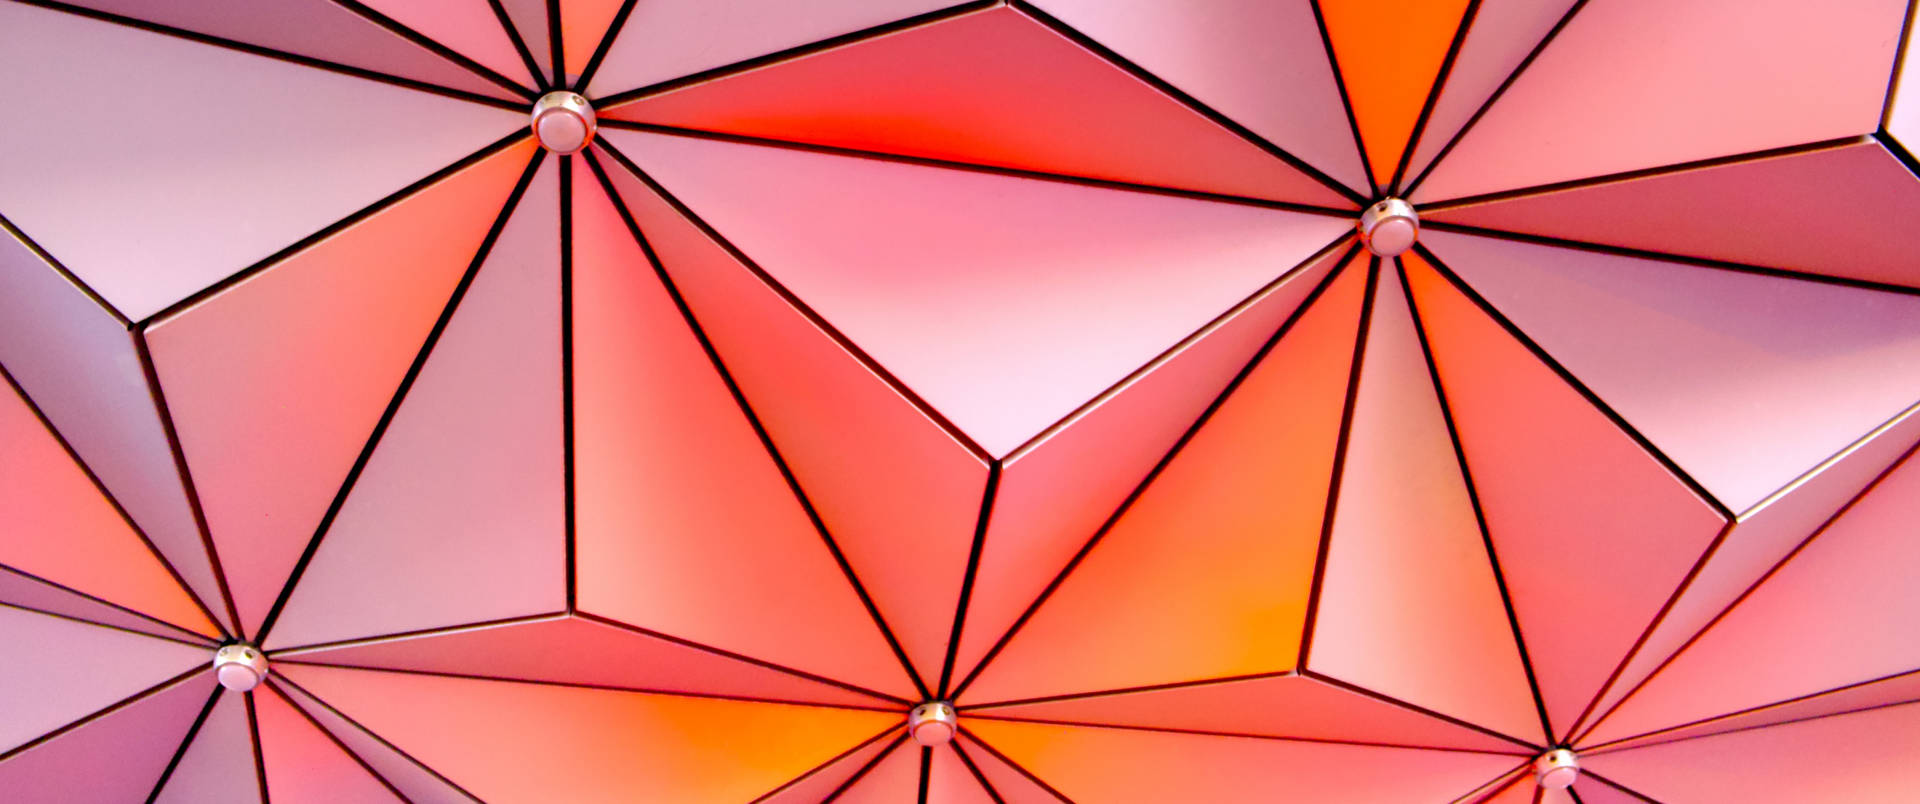 Orange And Pink Epcot Globe Wallpaper